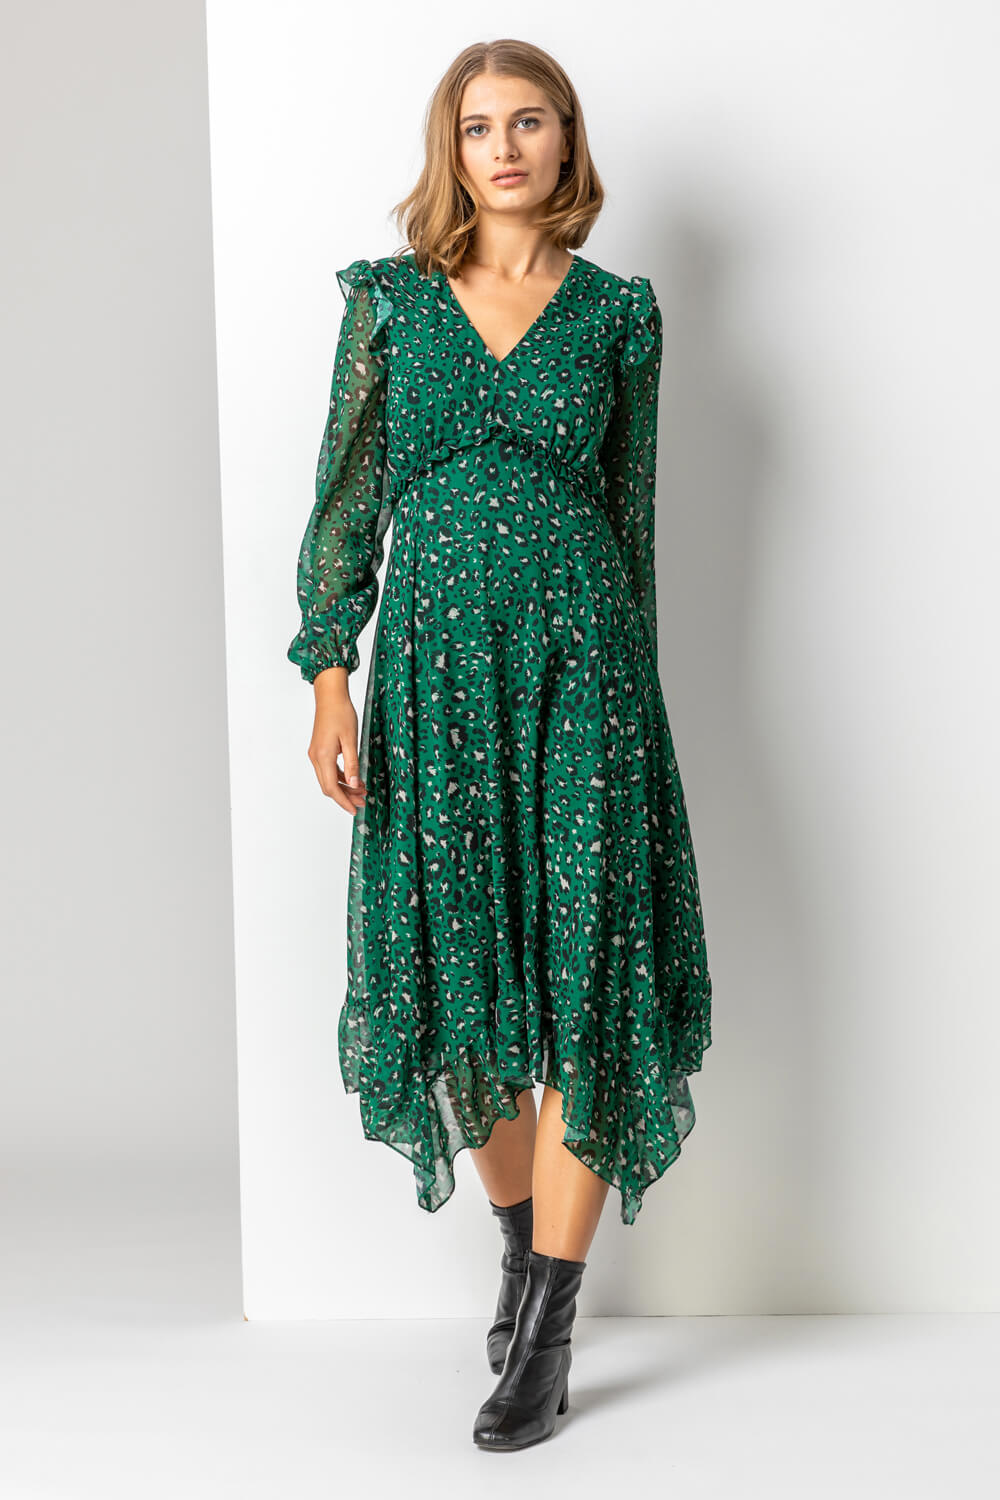 Green Animal Print Chiffon Midi Dress, Image 3 of 5